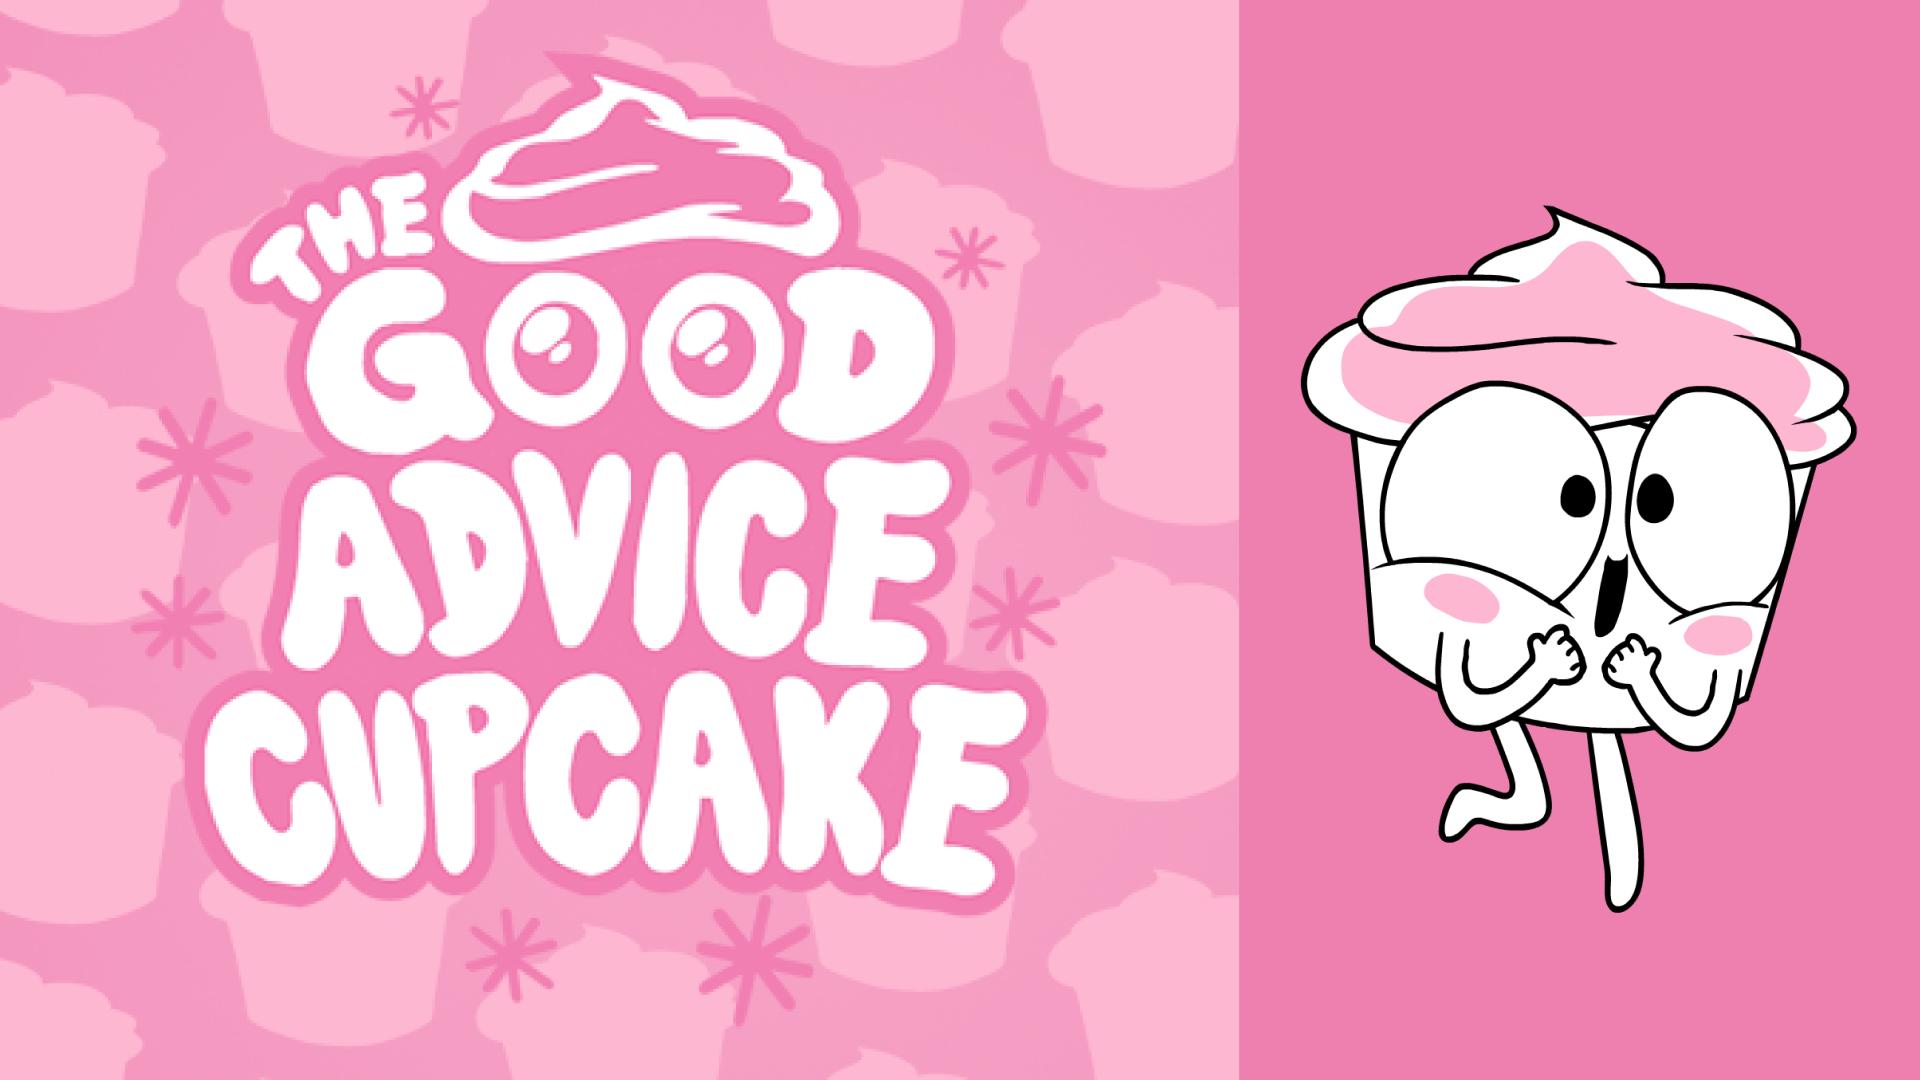 The Good Advice Cupcake: Greatest Hits